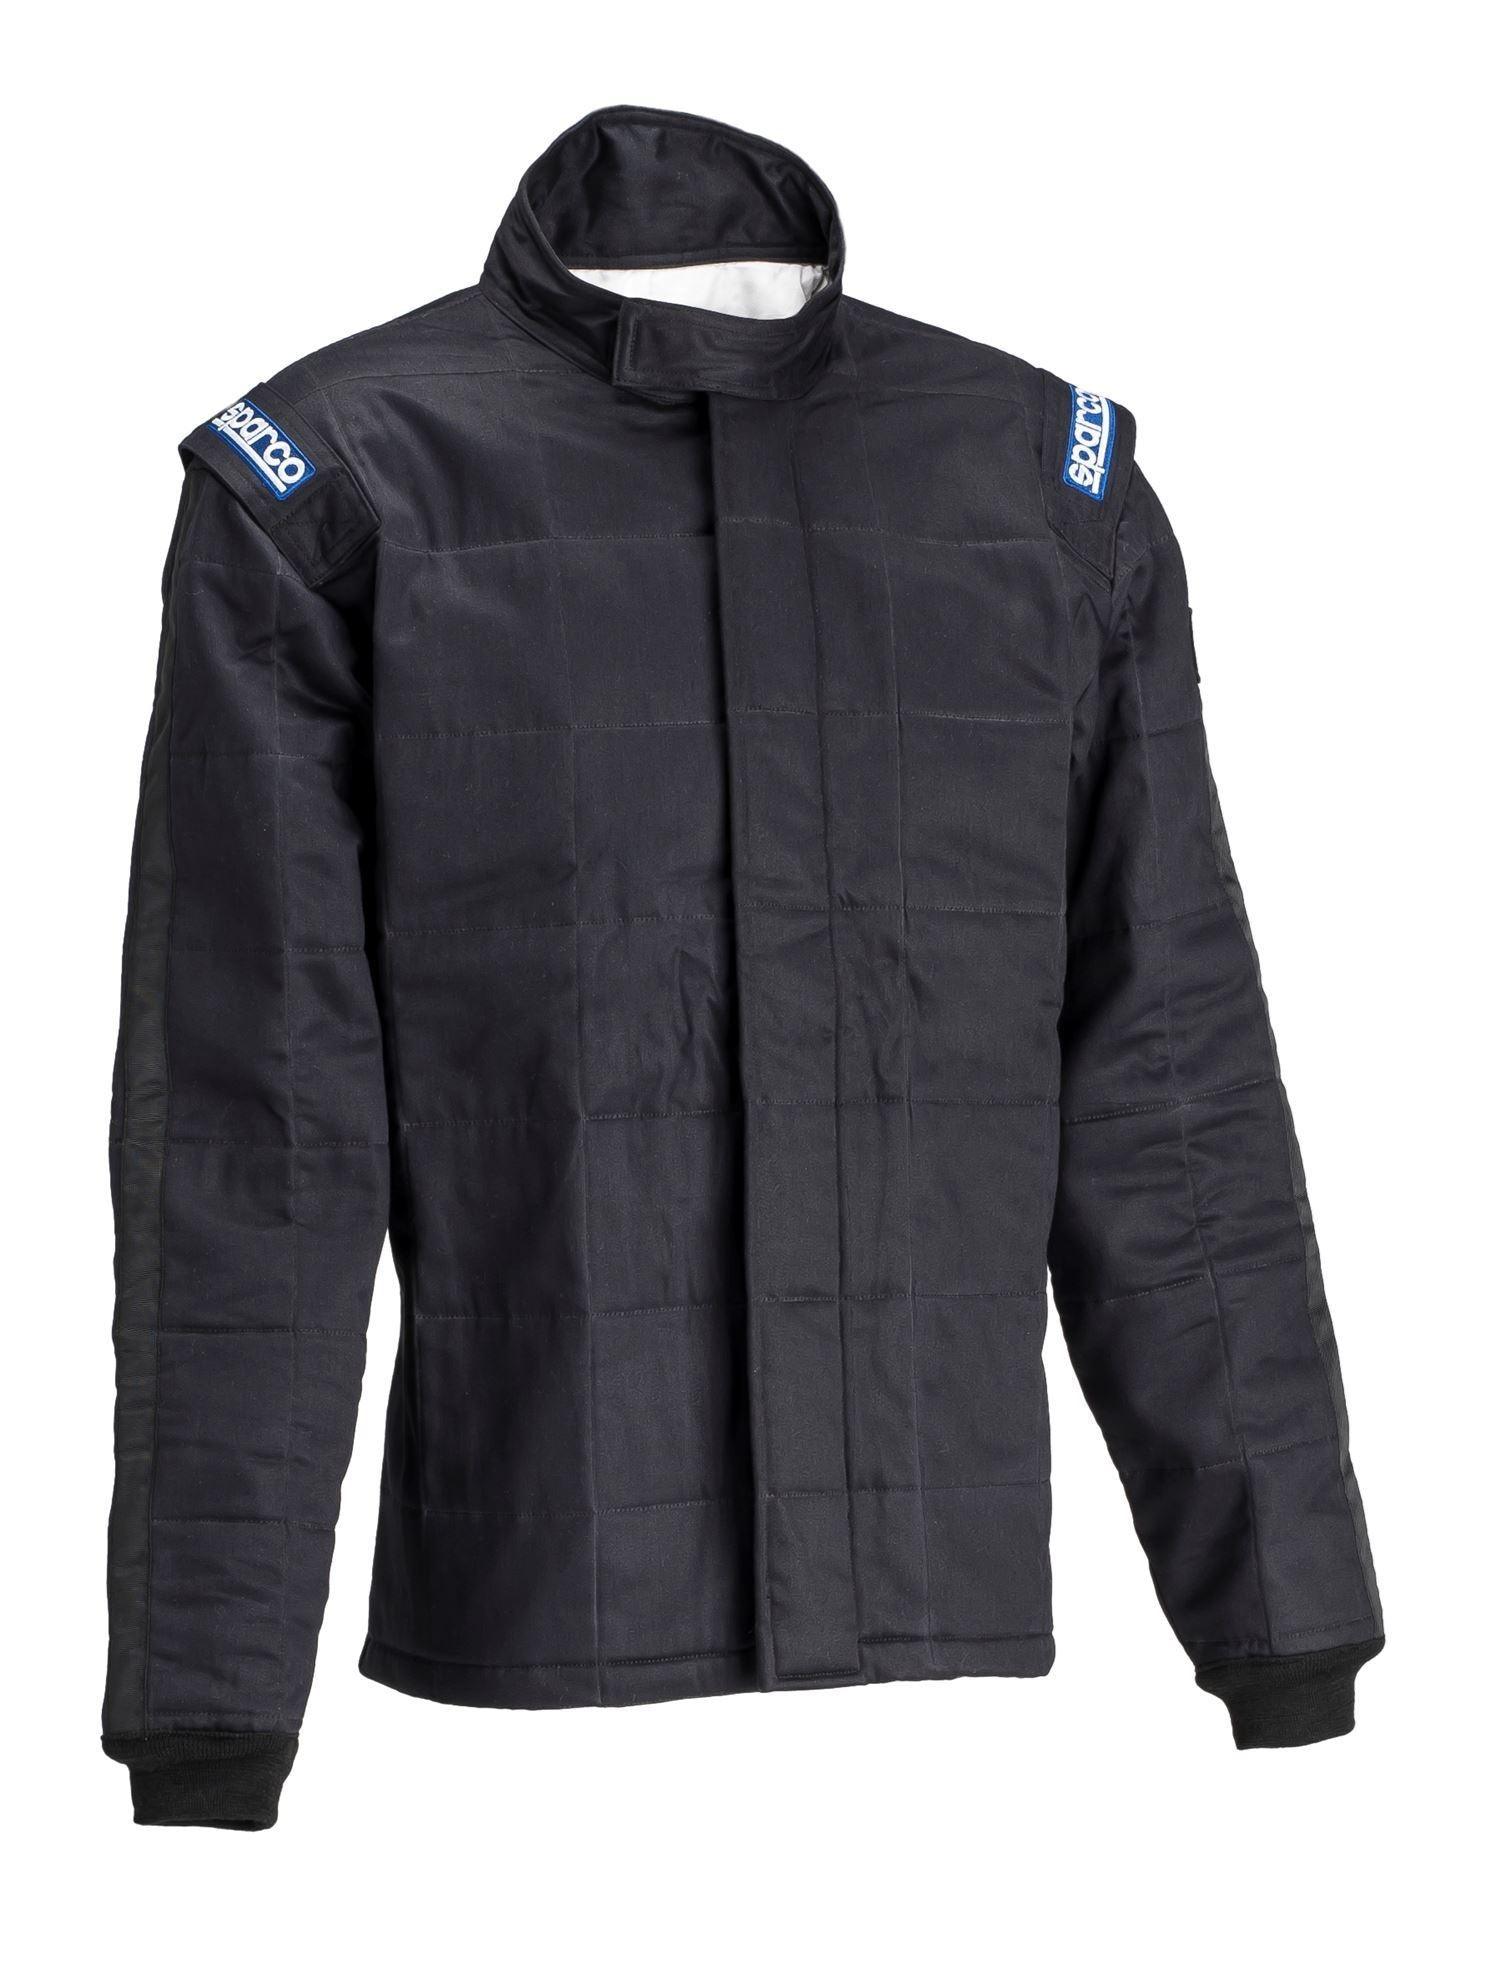 Jacket Jade 3 Black X-Large - Burlile Performance Products